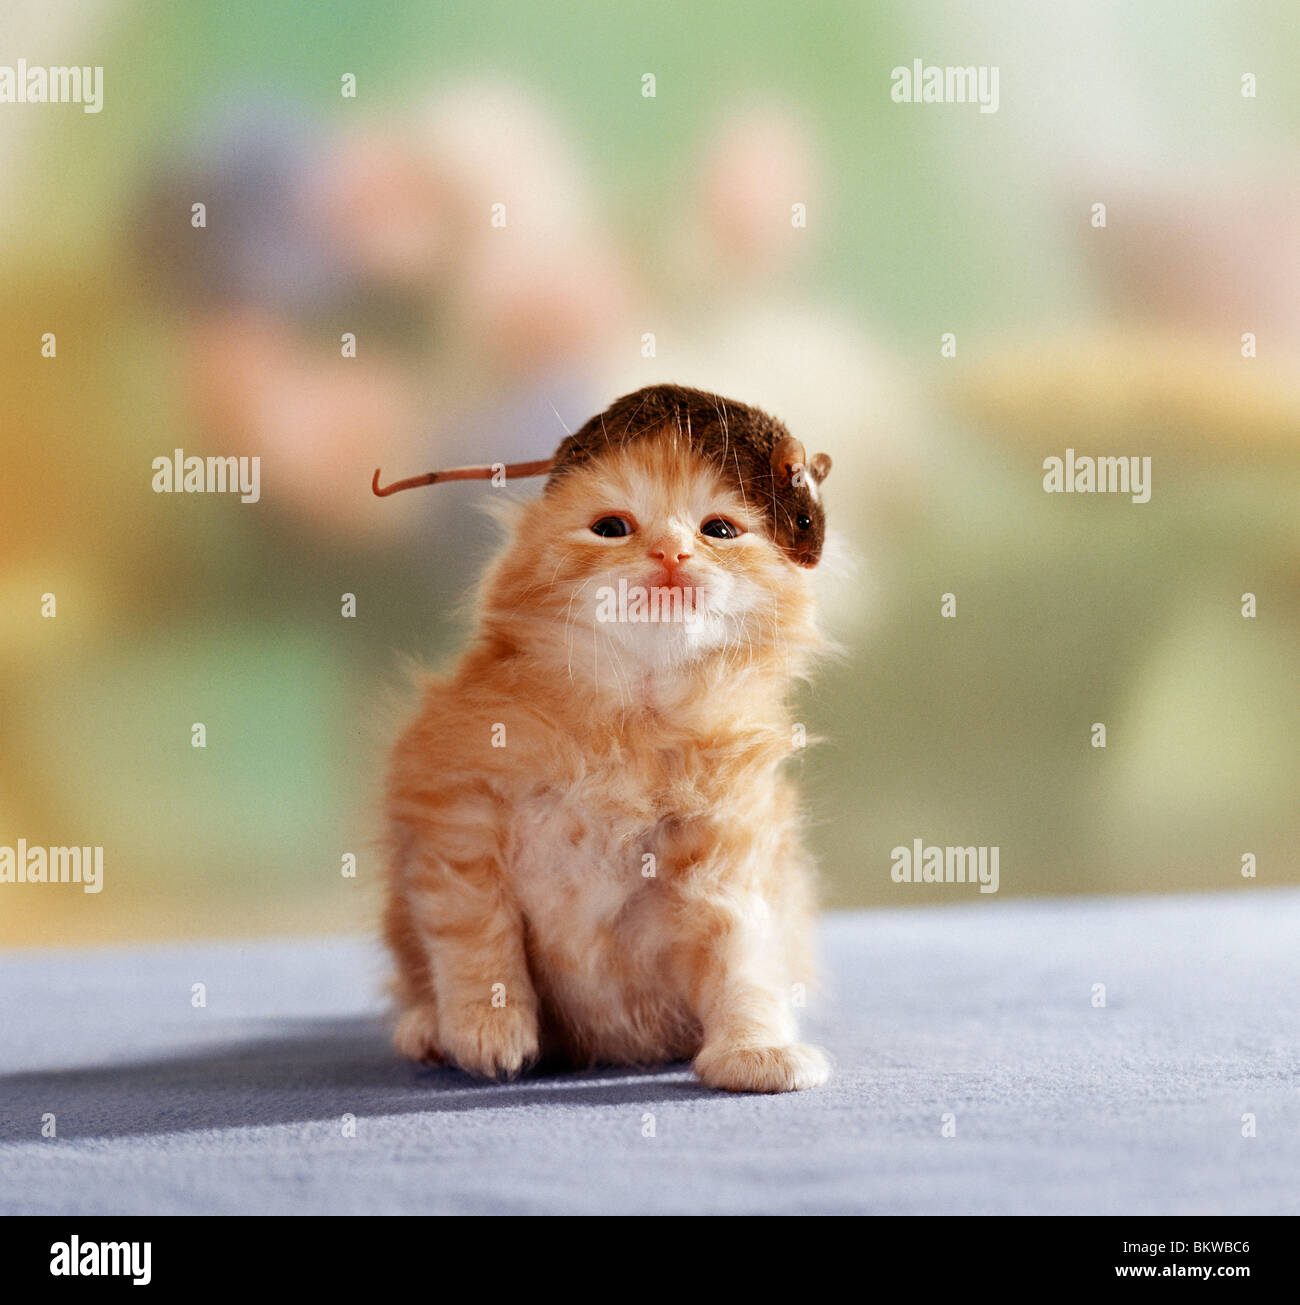 animal friendship : domestic cat kitten mouse Stock Photo